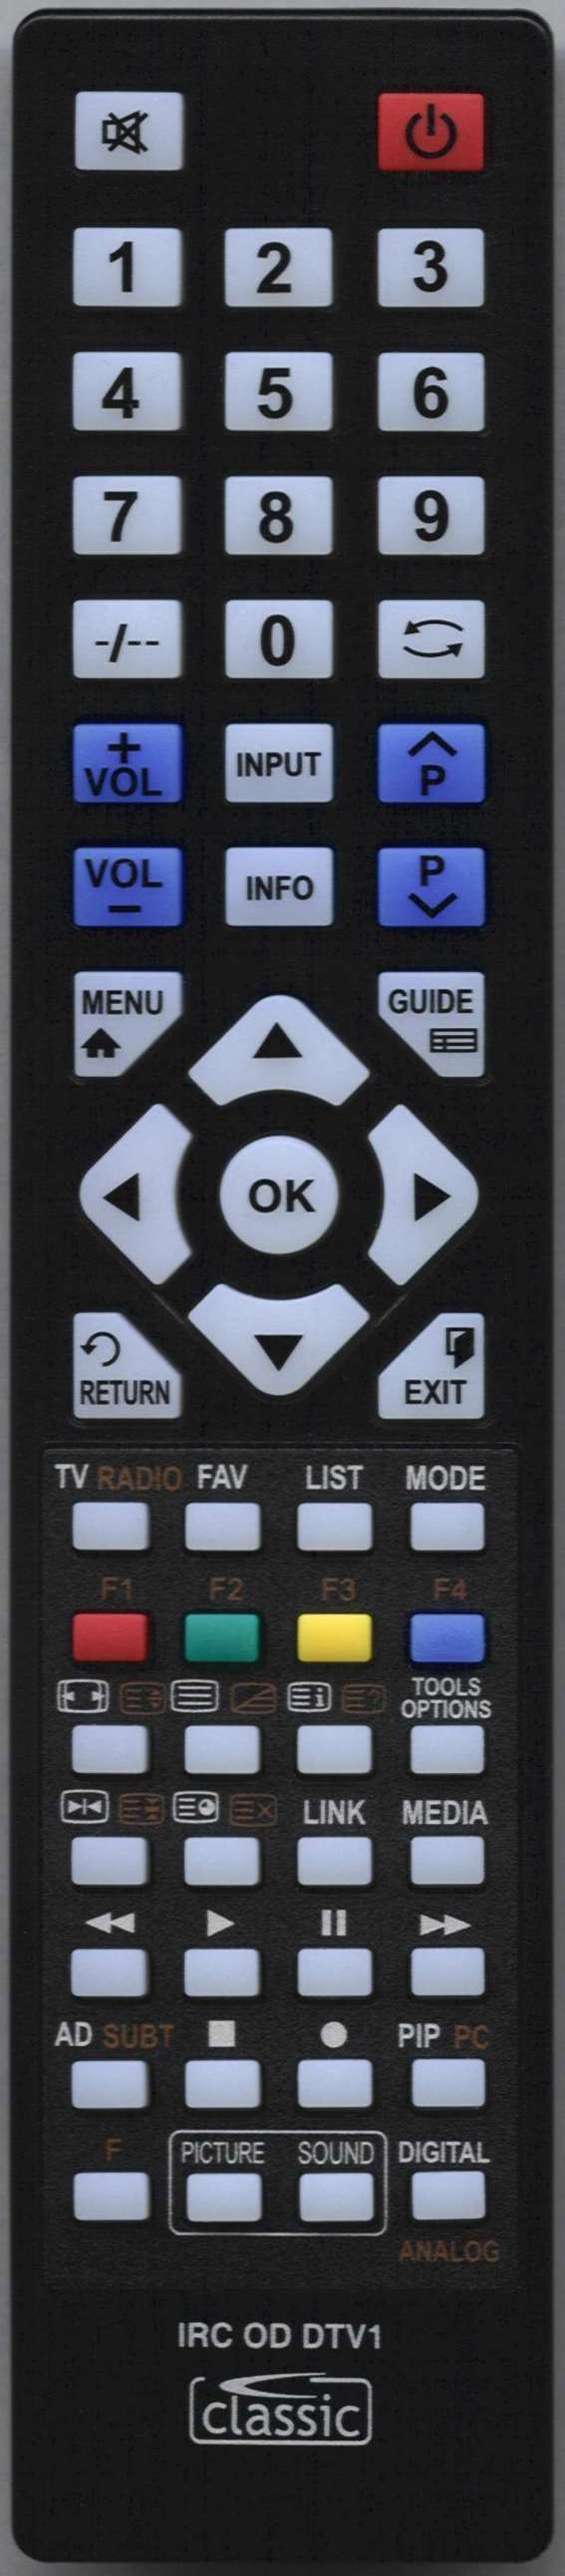 SONY KDLS26A12U Remote Control